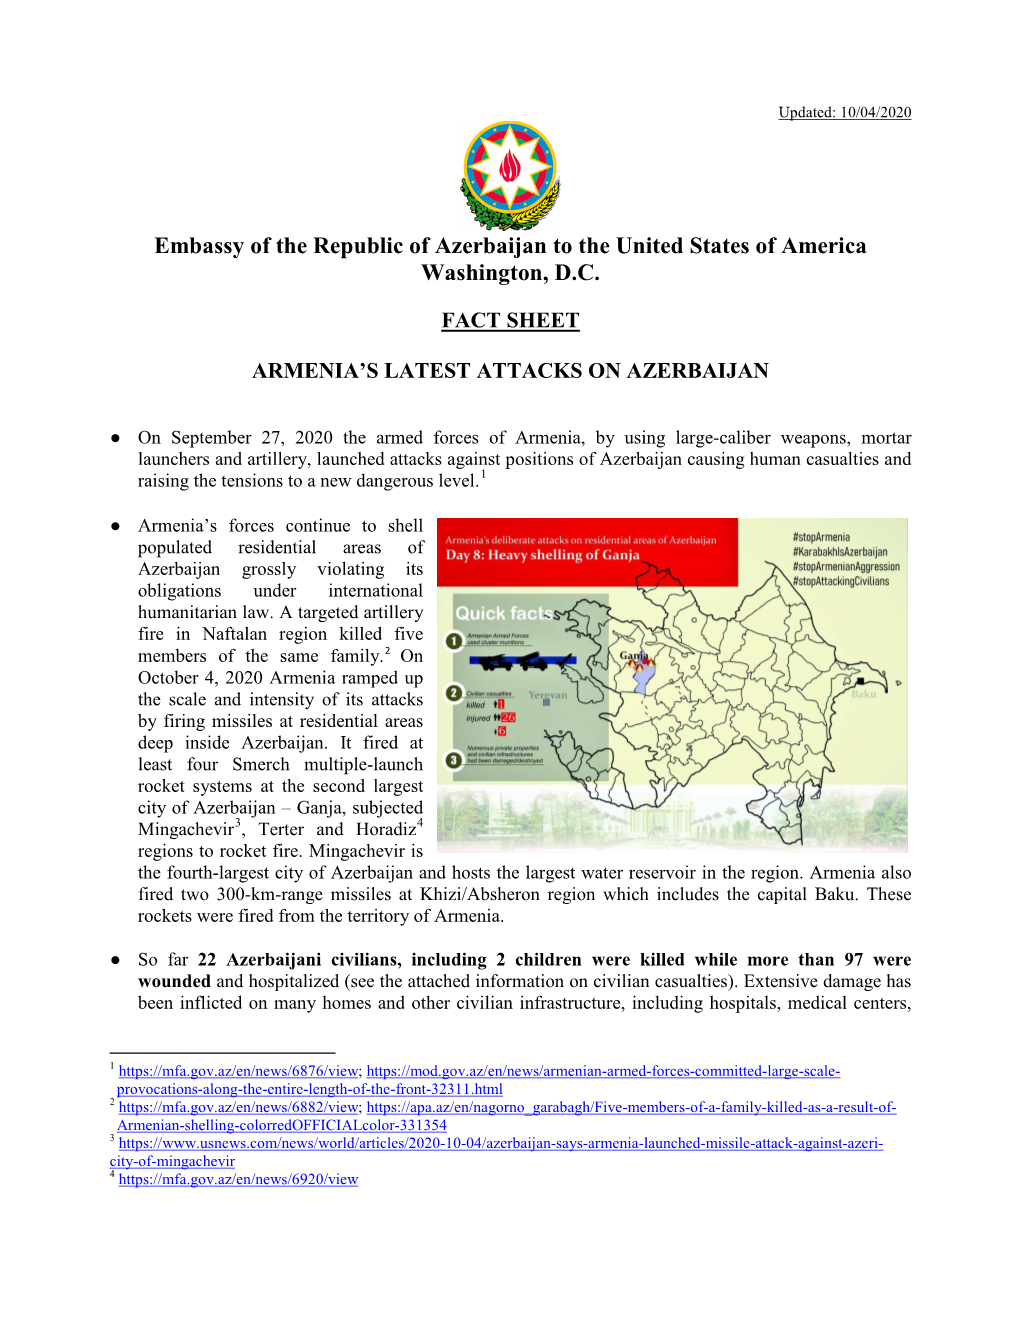 FACTSHEET Armenia Attacks Azerbaijani